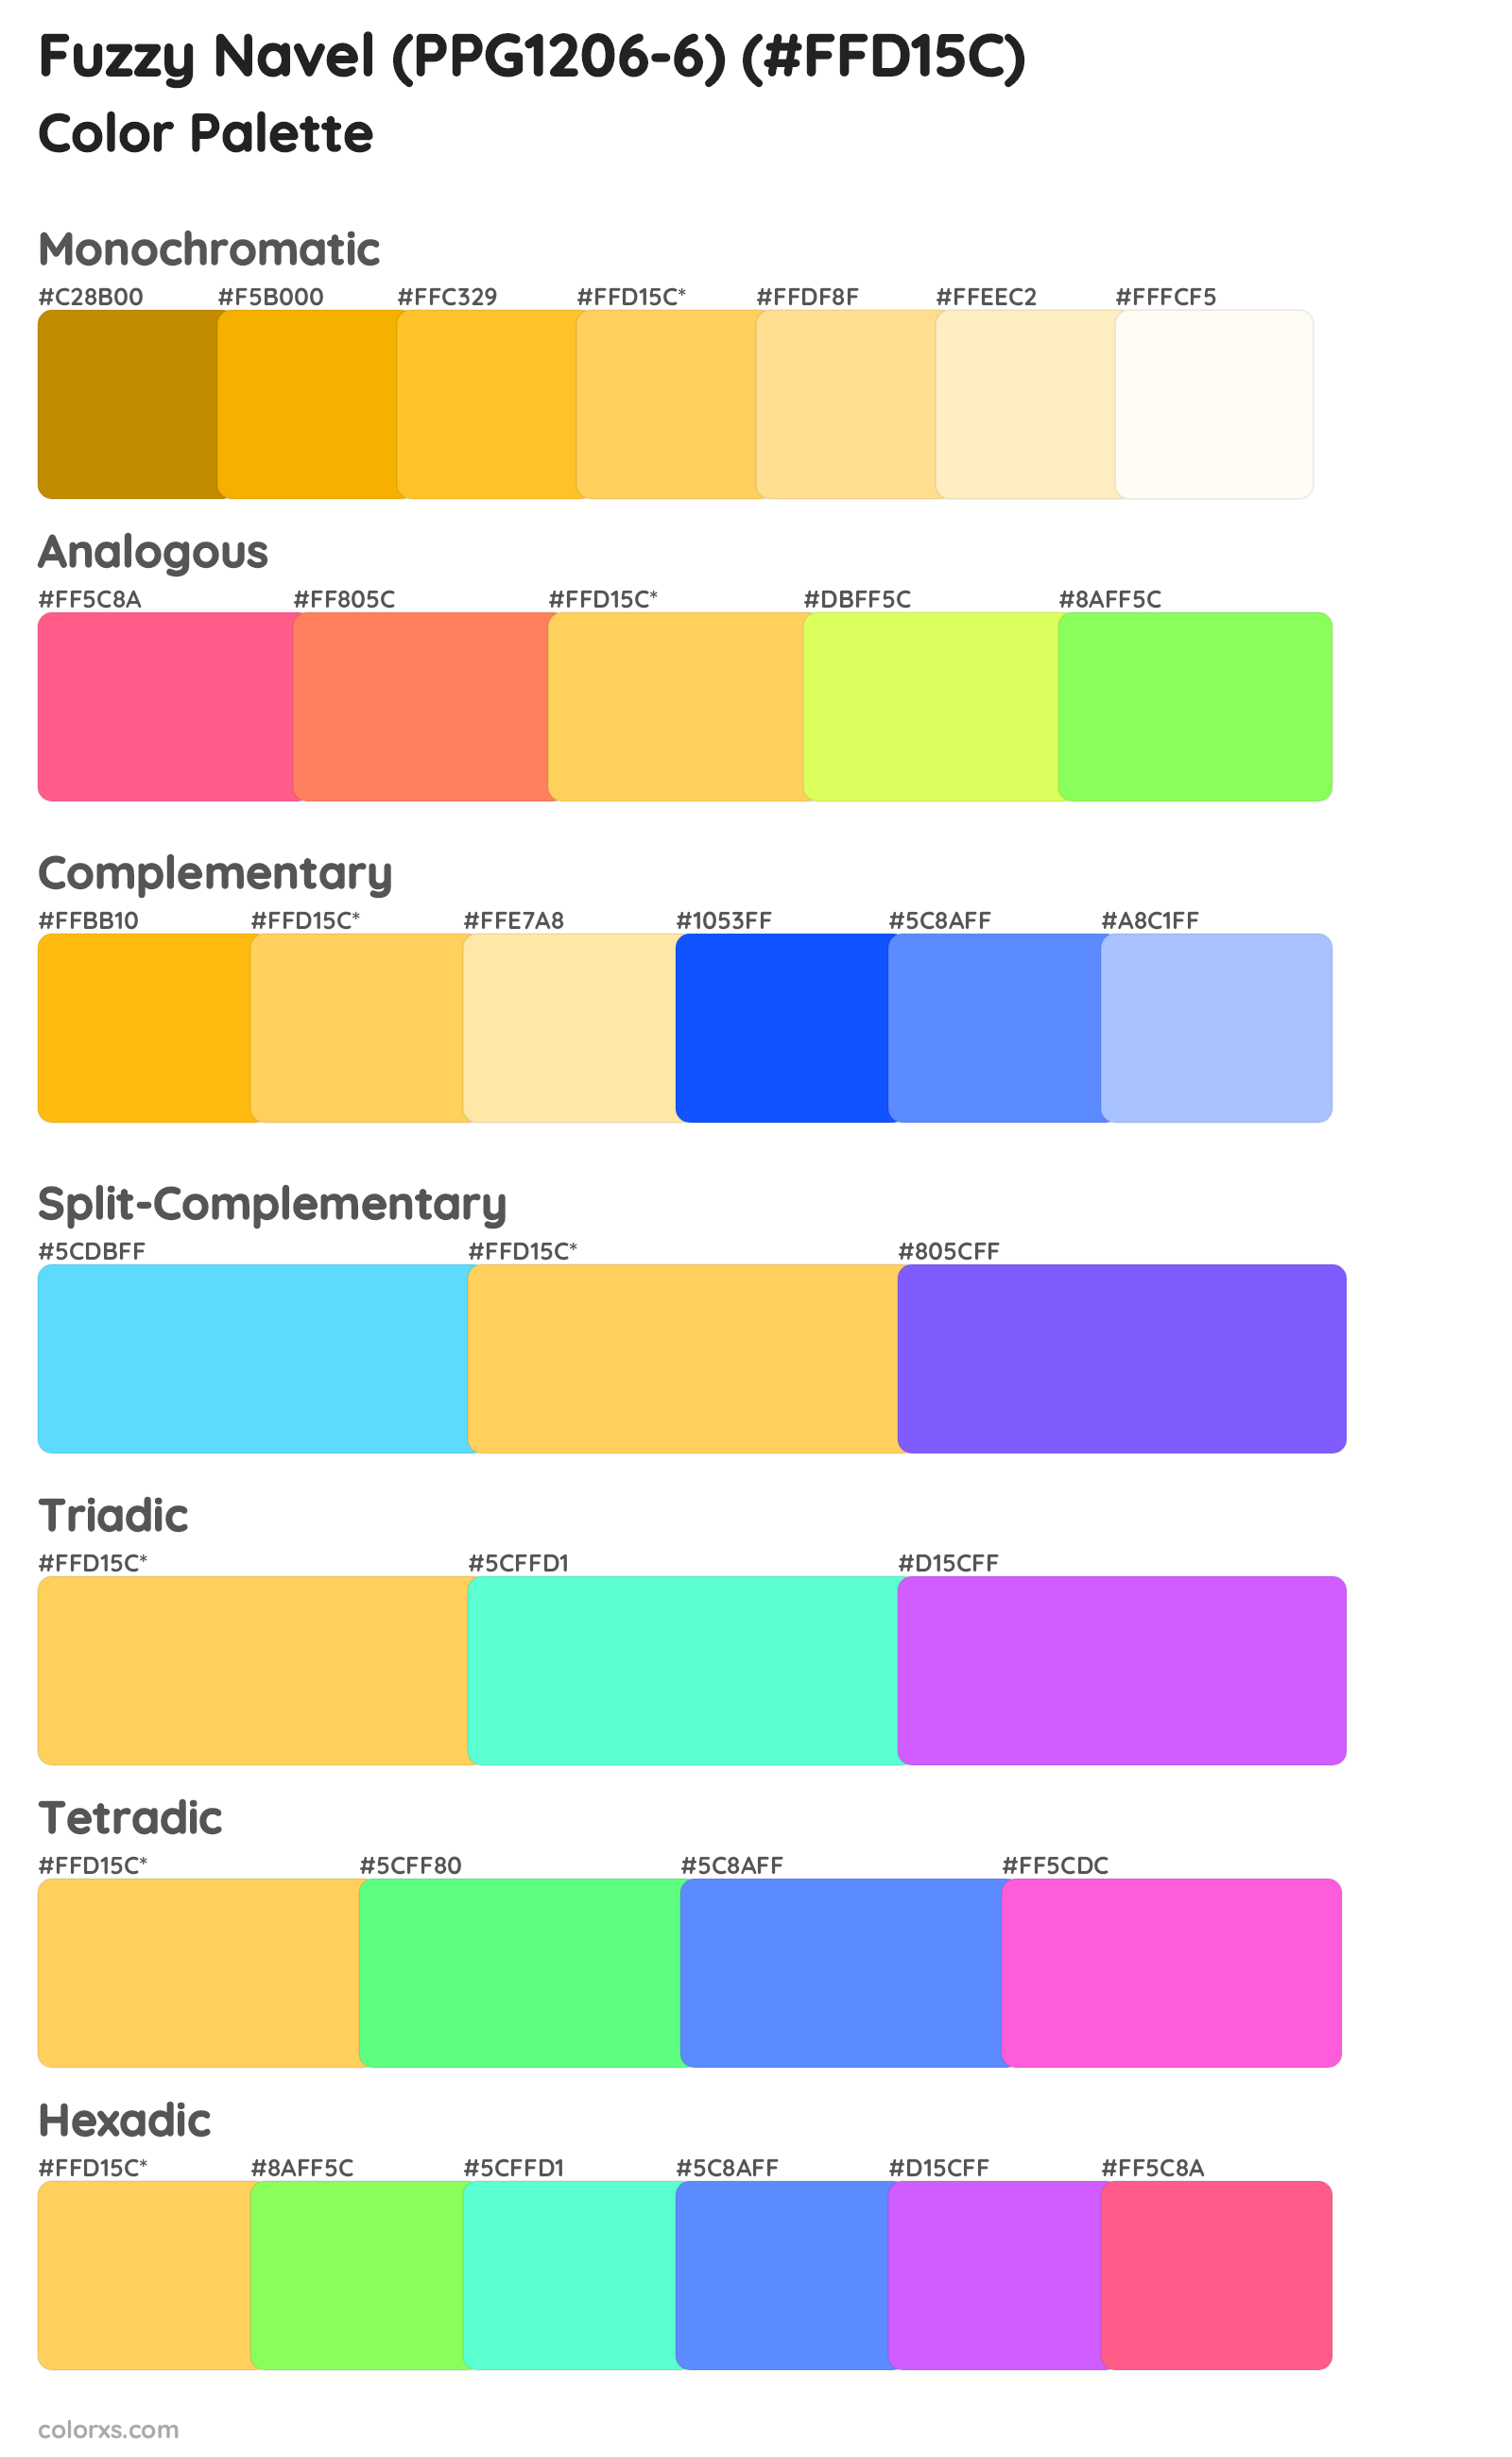 Fuzzy Navel (PPG1206-6) Color Scheme Palettes